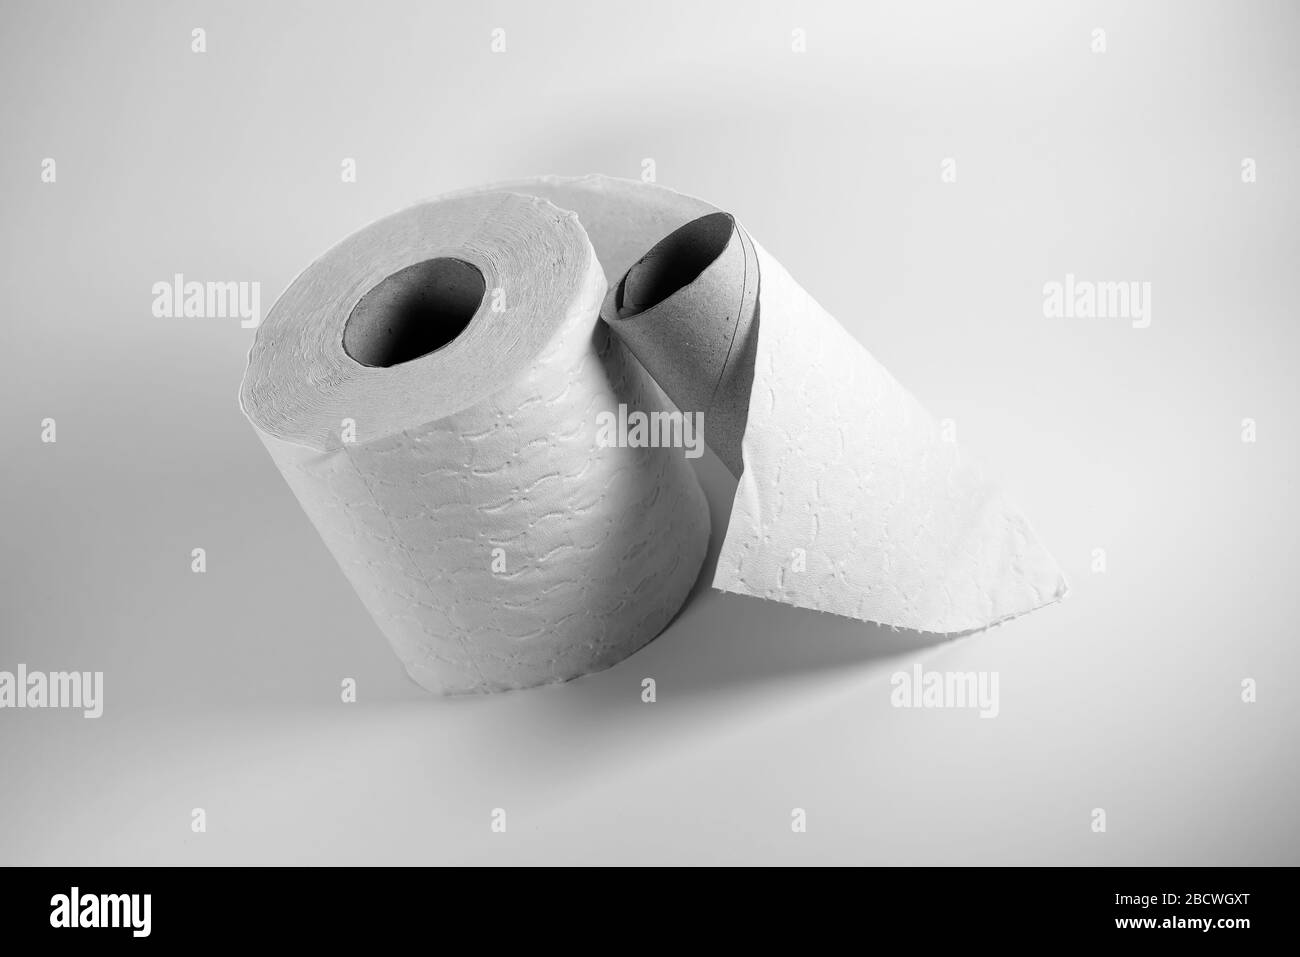 Die Toilettenpapierrolle umfasst eine leere toilettenpapierrolle Stockfoto